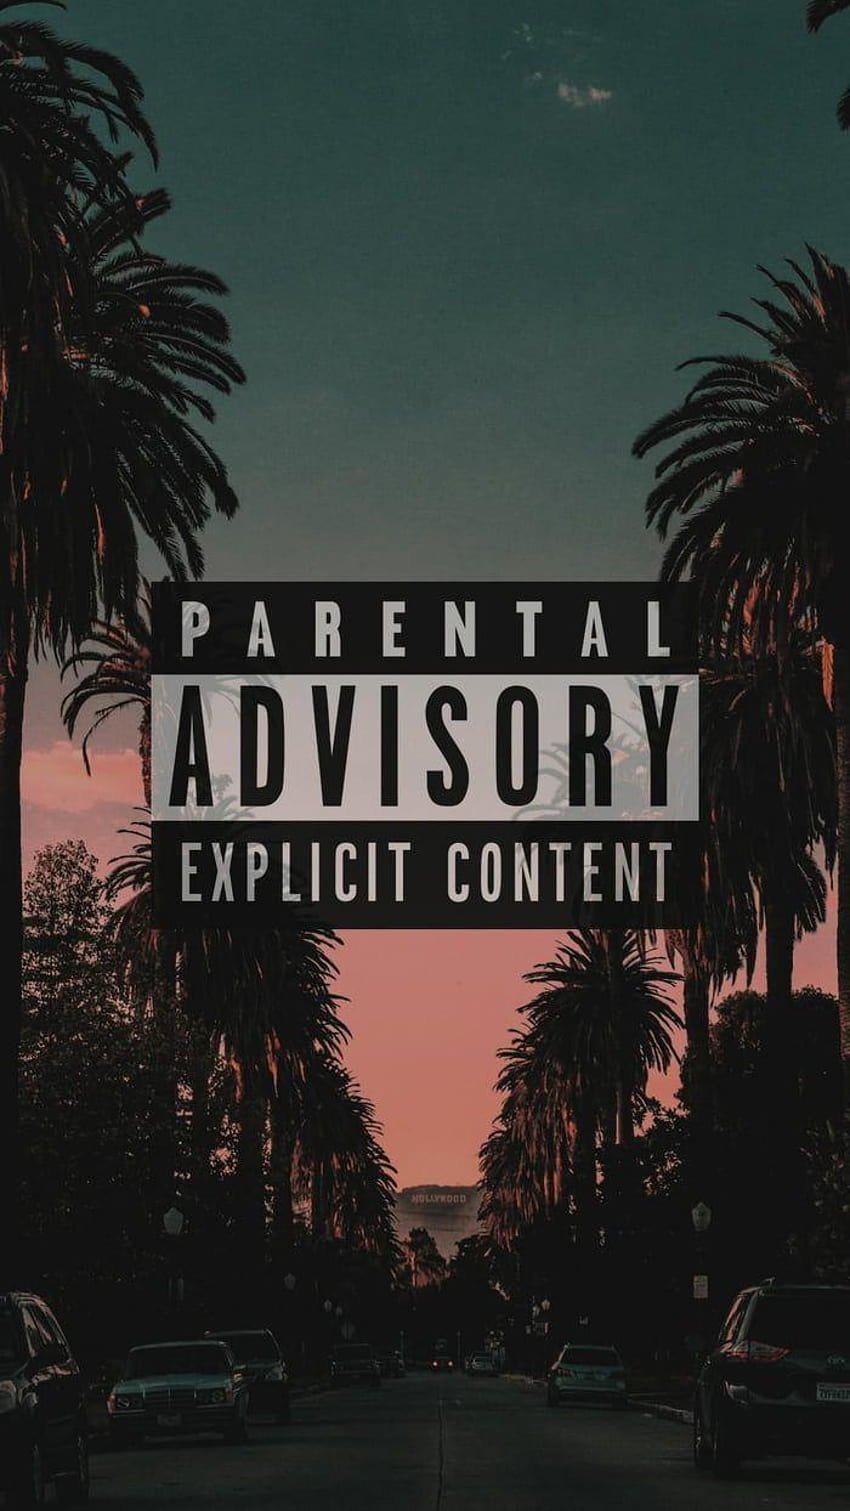 Explicit Content in 2019, parental advisory explicit content HD phone wallpaper